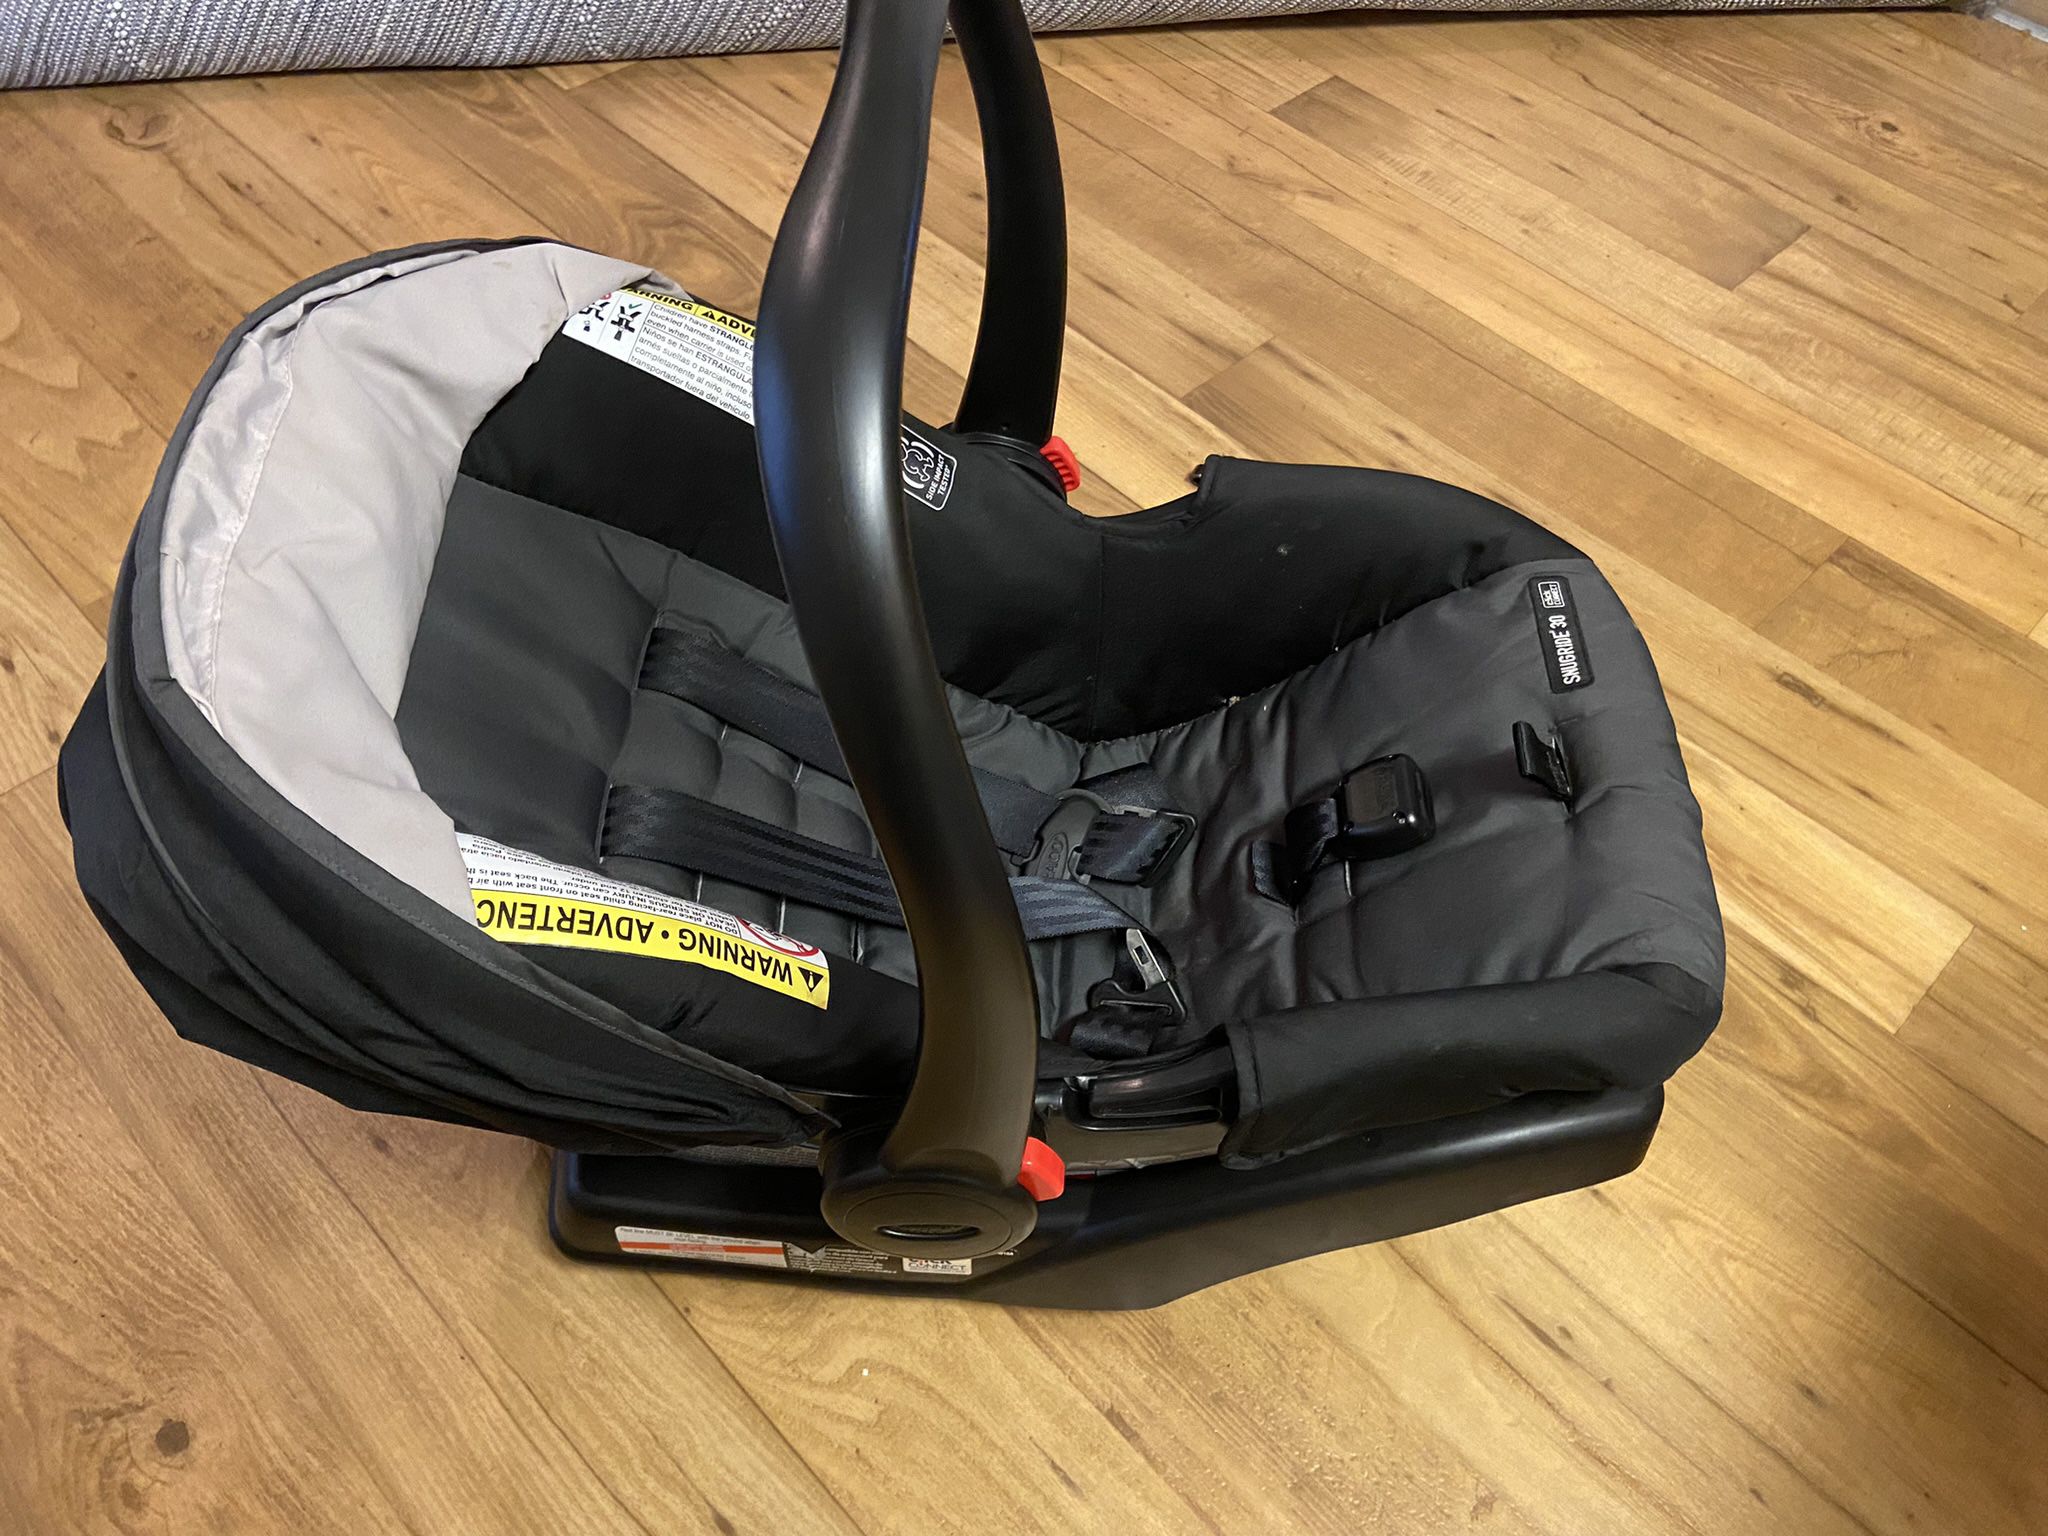 GRACO Infant Car Seat